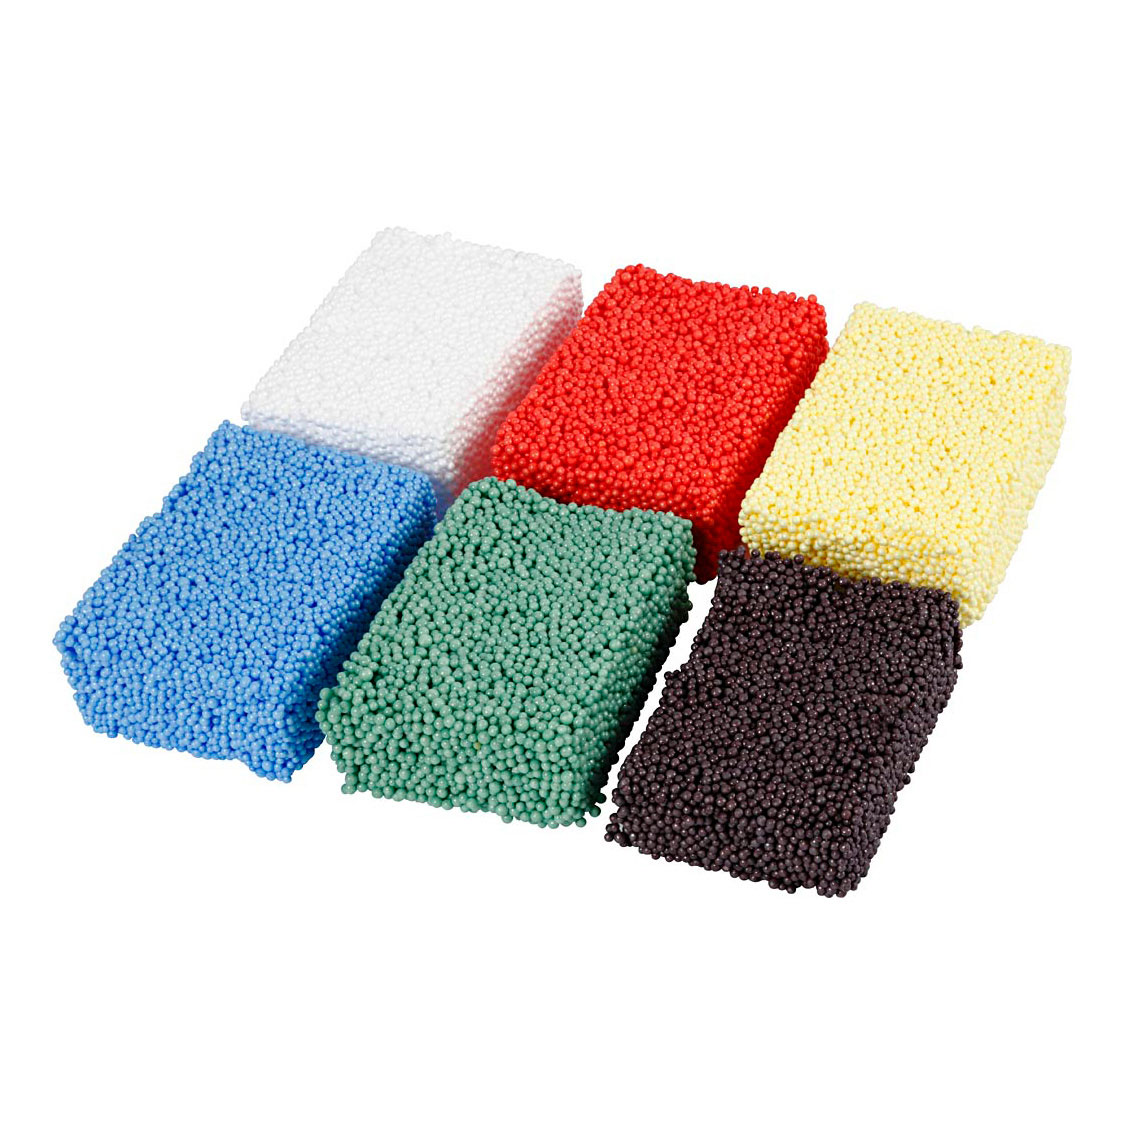 Soft Foam Clay Standardfarben, 6x10gr.